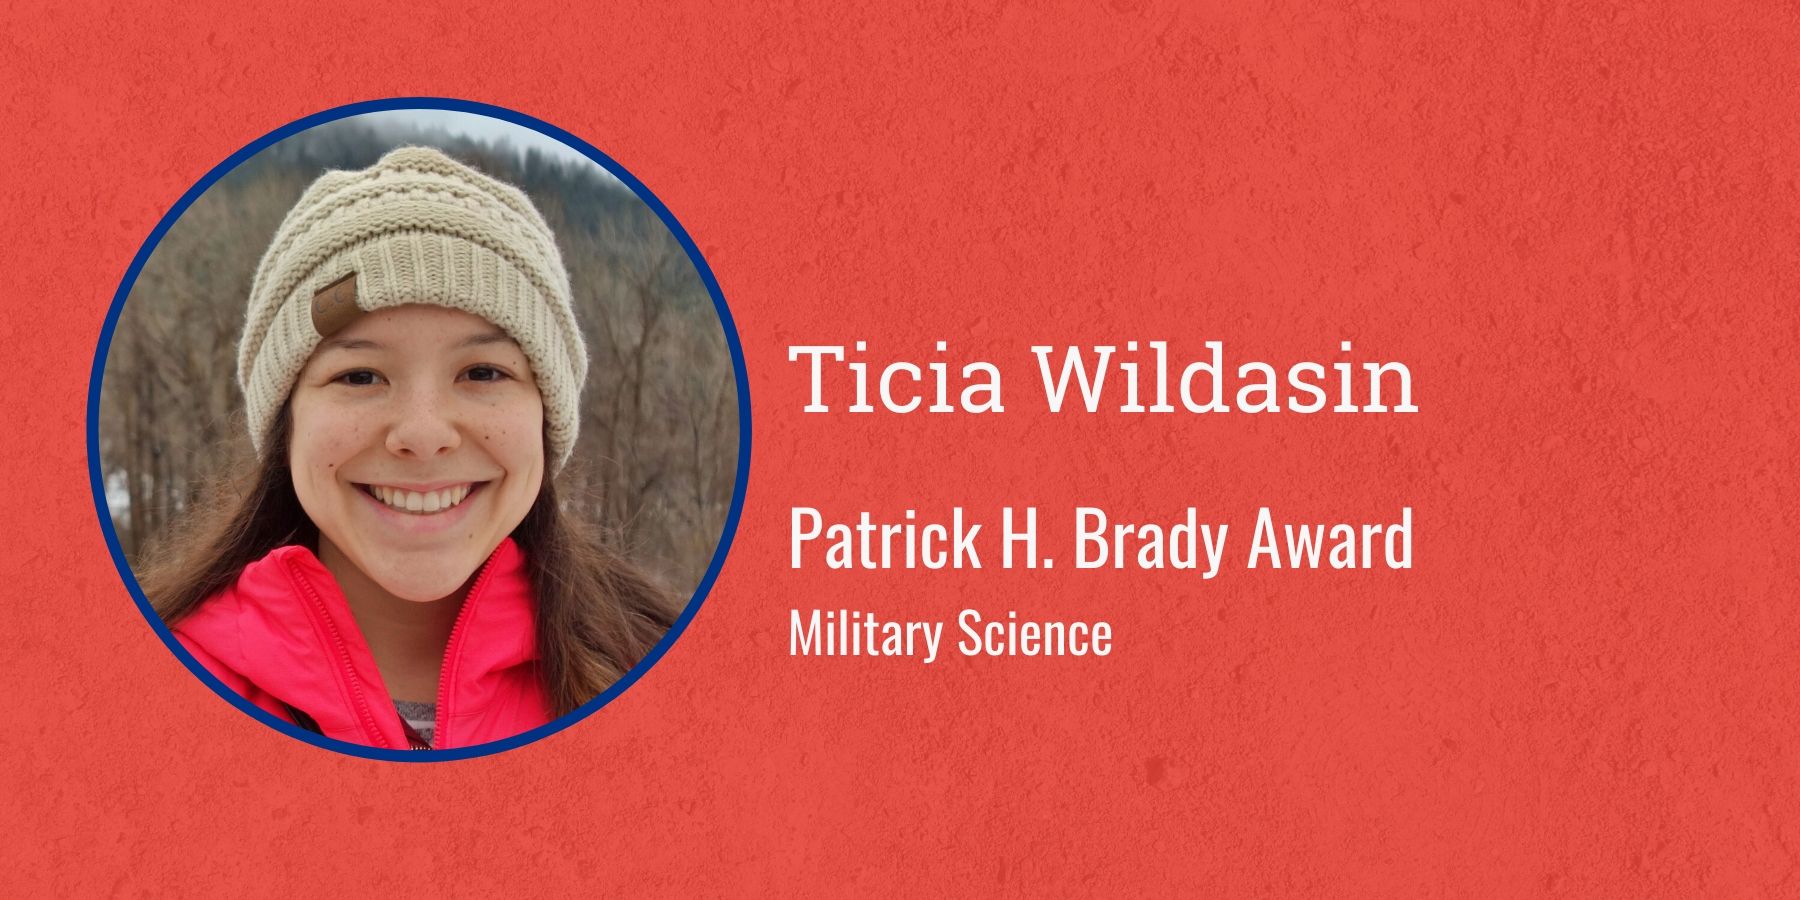 Photo of Ticia Wildasin and text Patrick H. Brady Award, Military Science